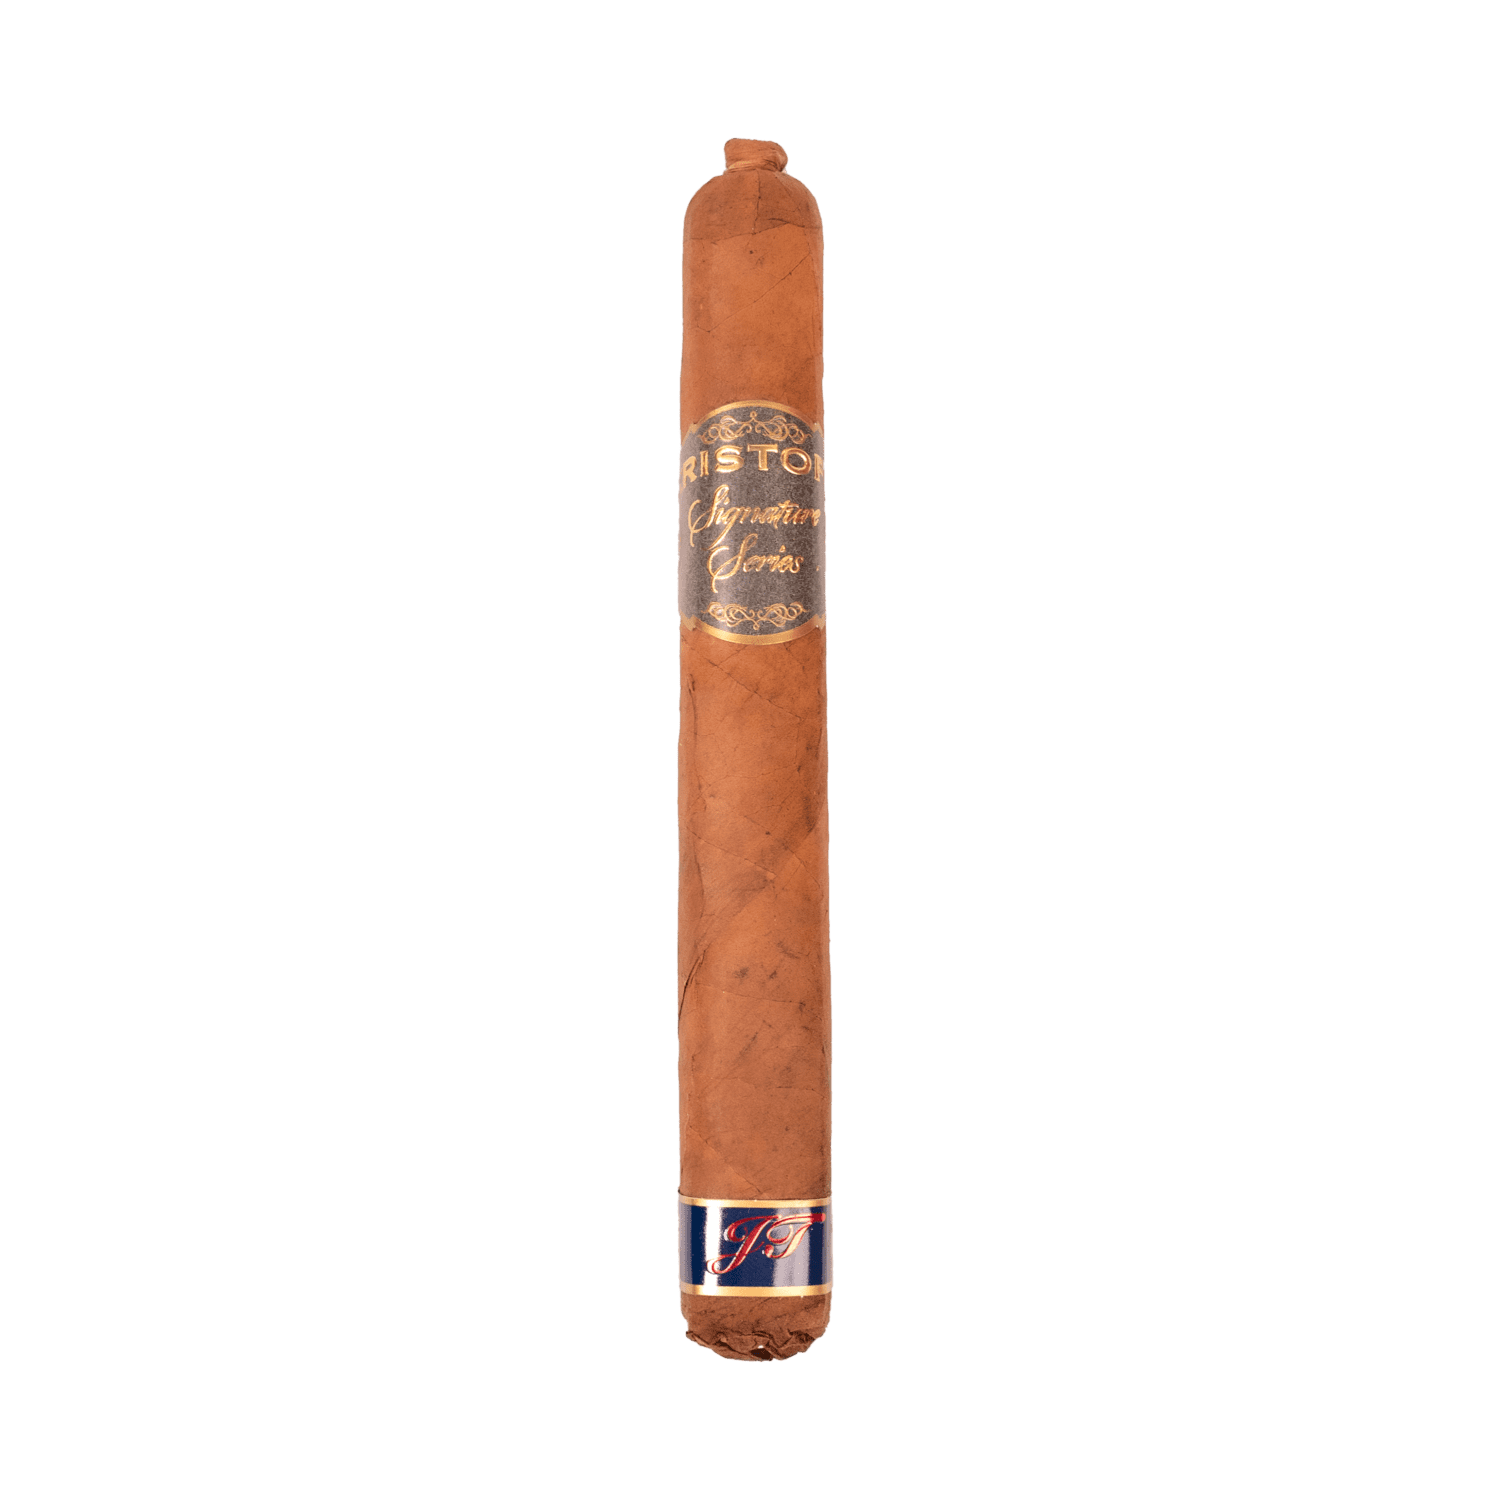 Kristoff Cigars: JT Signature Series Finest Cigars